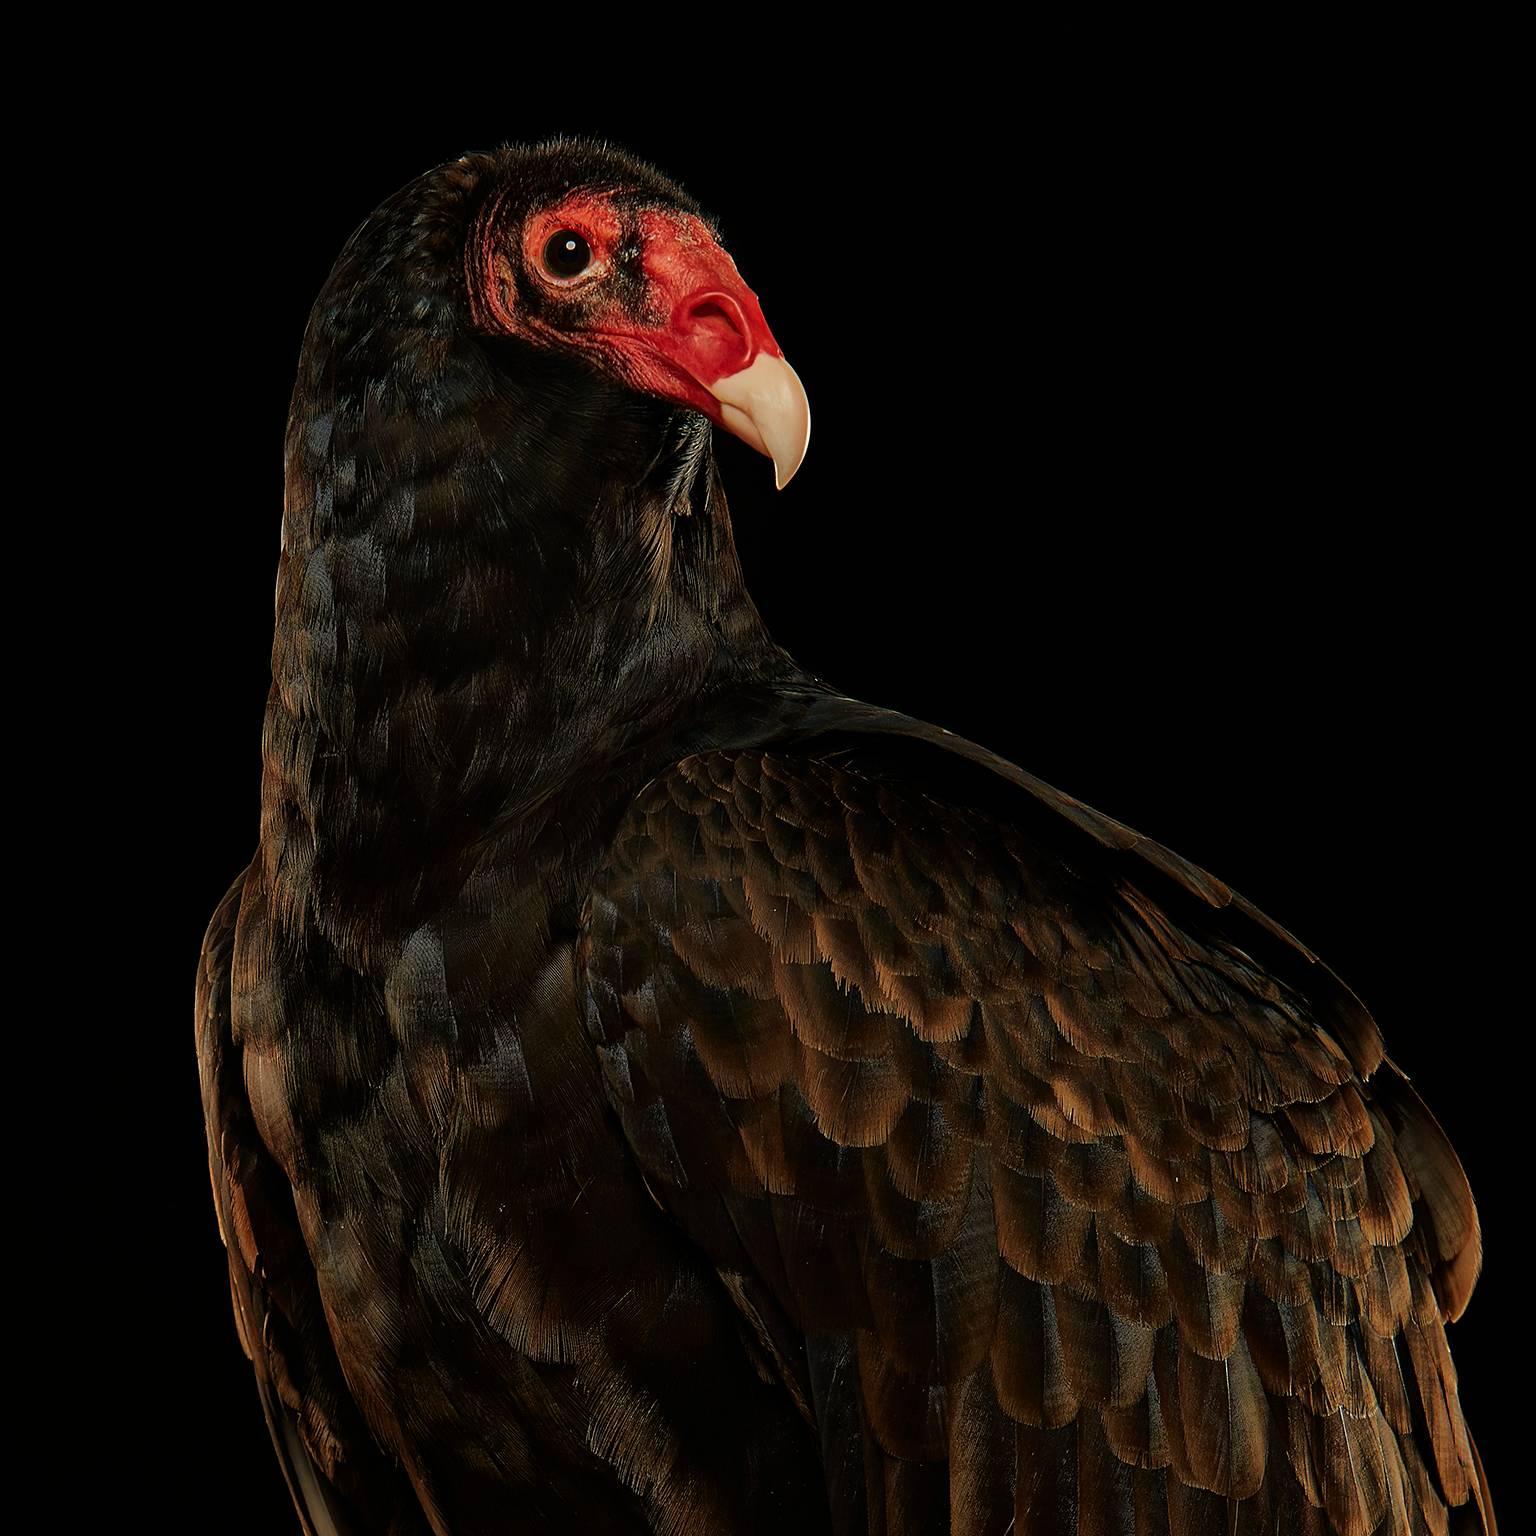 Birds of Prey Turkey Vulture No.8 - Photograph by Chris Gordaneer